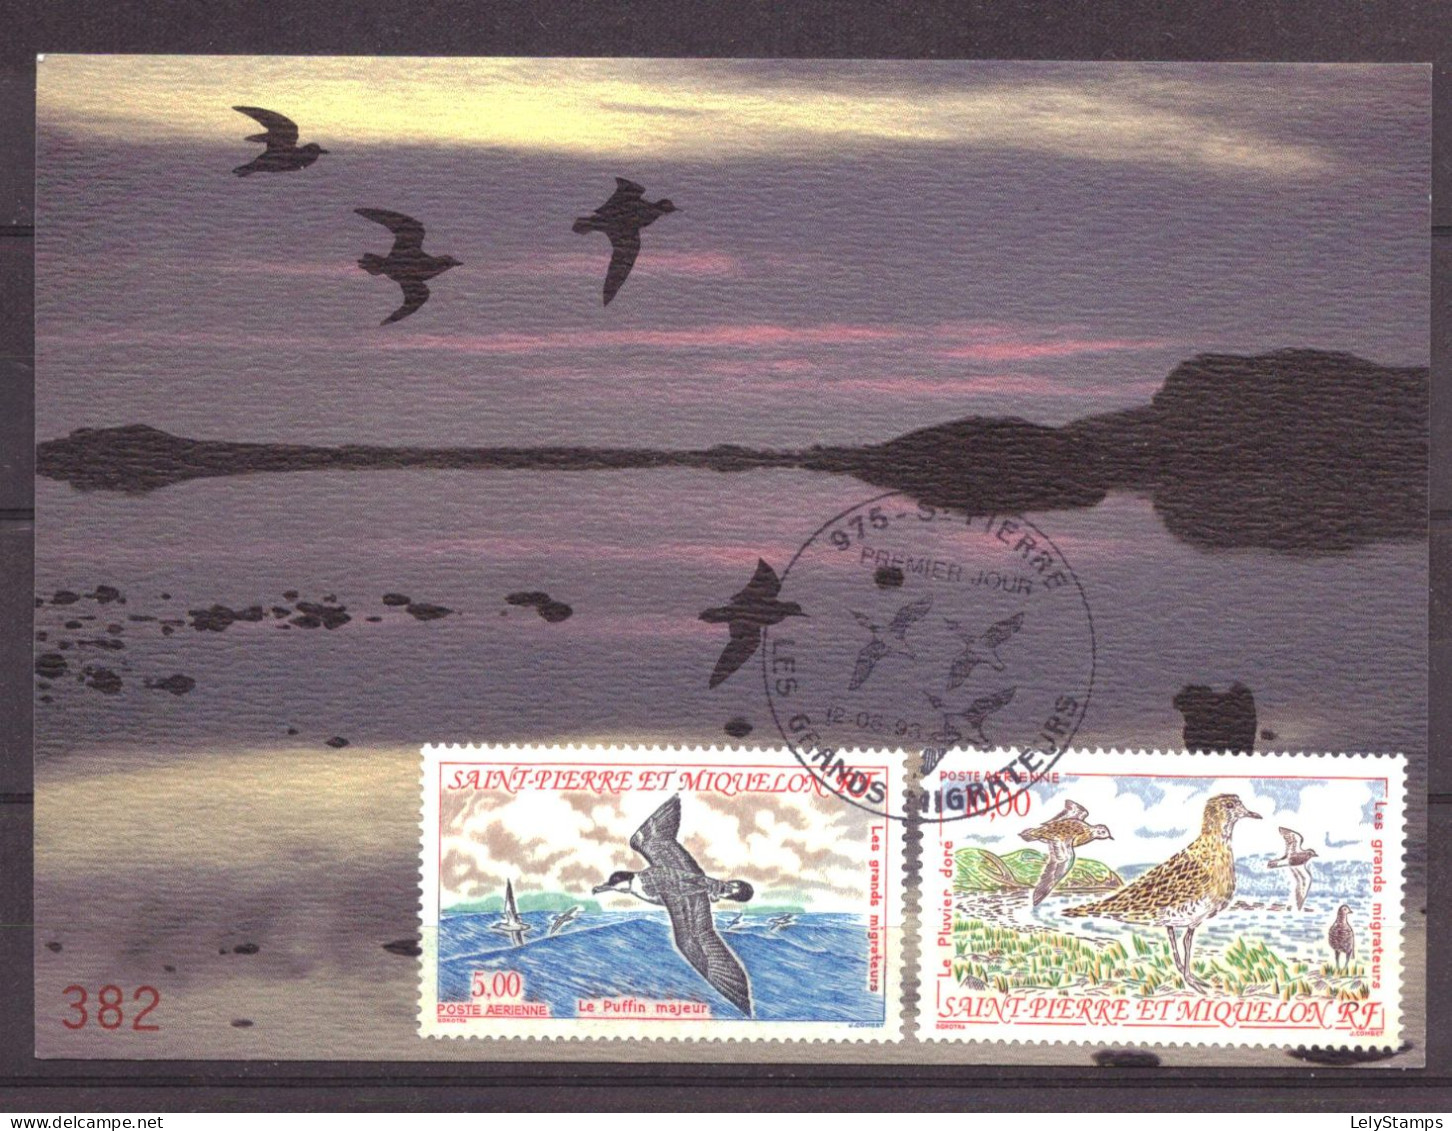 Saint-Pierre En Miquelon 654 & 655 FDC Birds Animals Nature (1993) - Cartoline Maximum